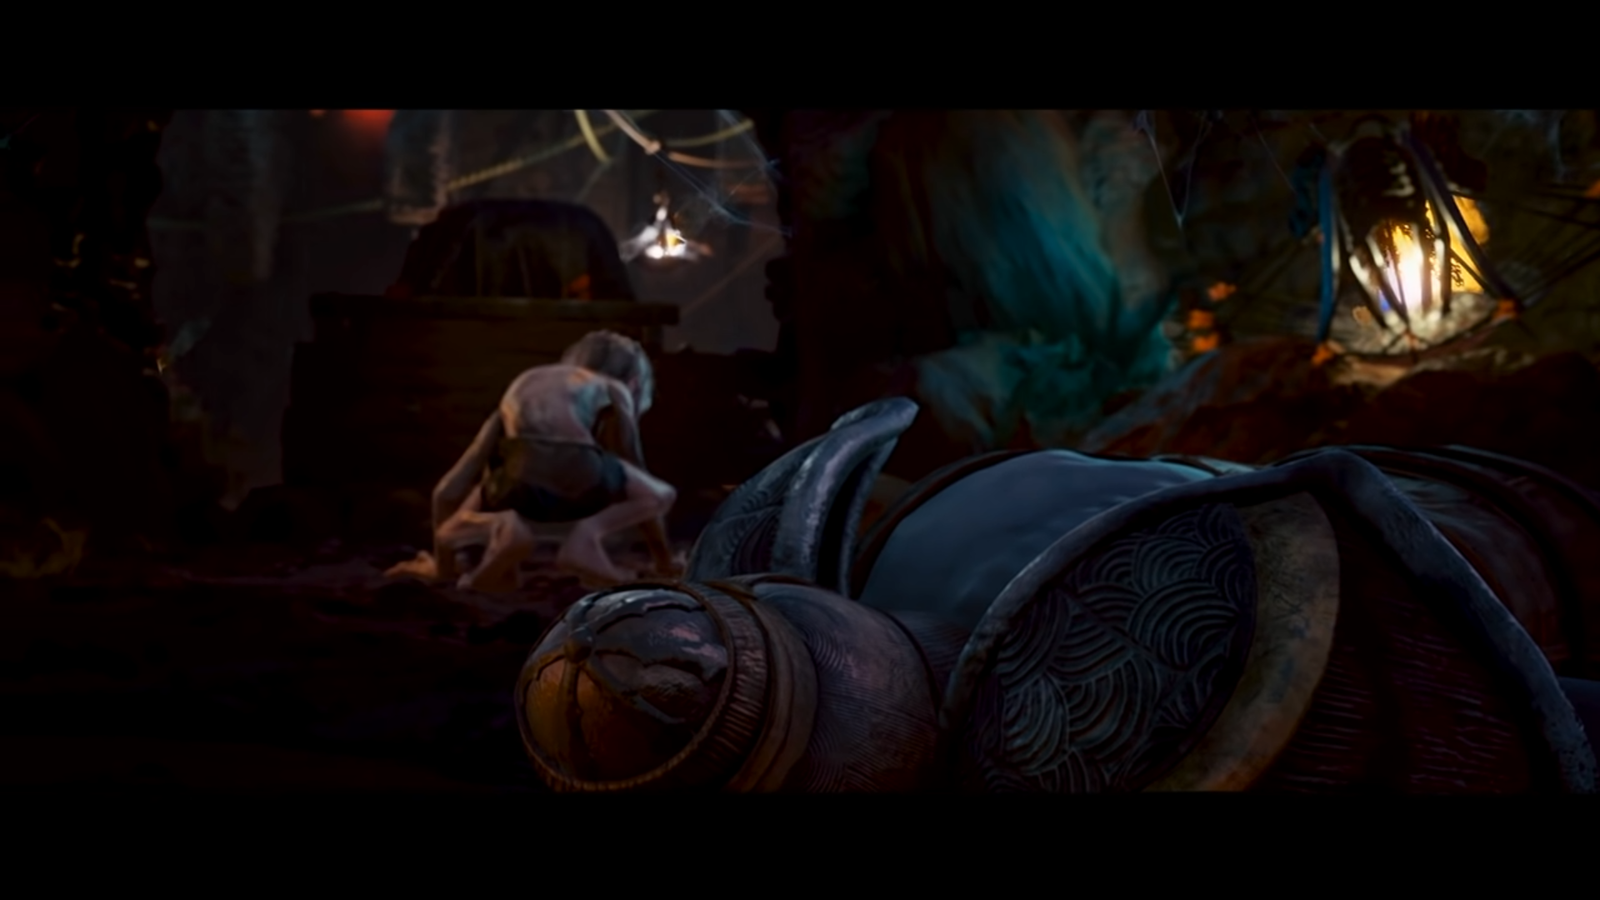 Gollum game image showing Gollum sitting near dead Orc.